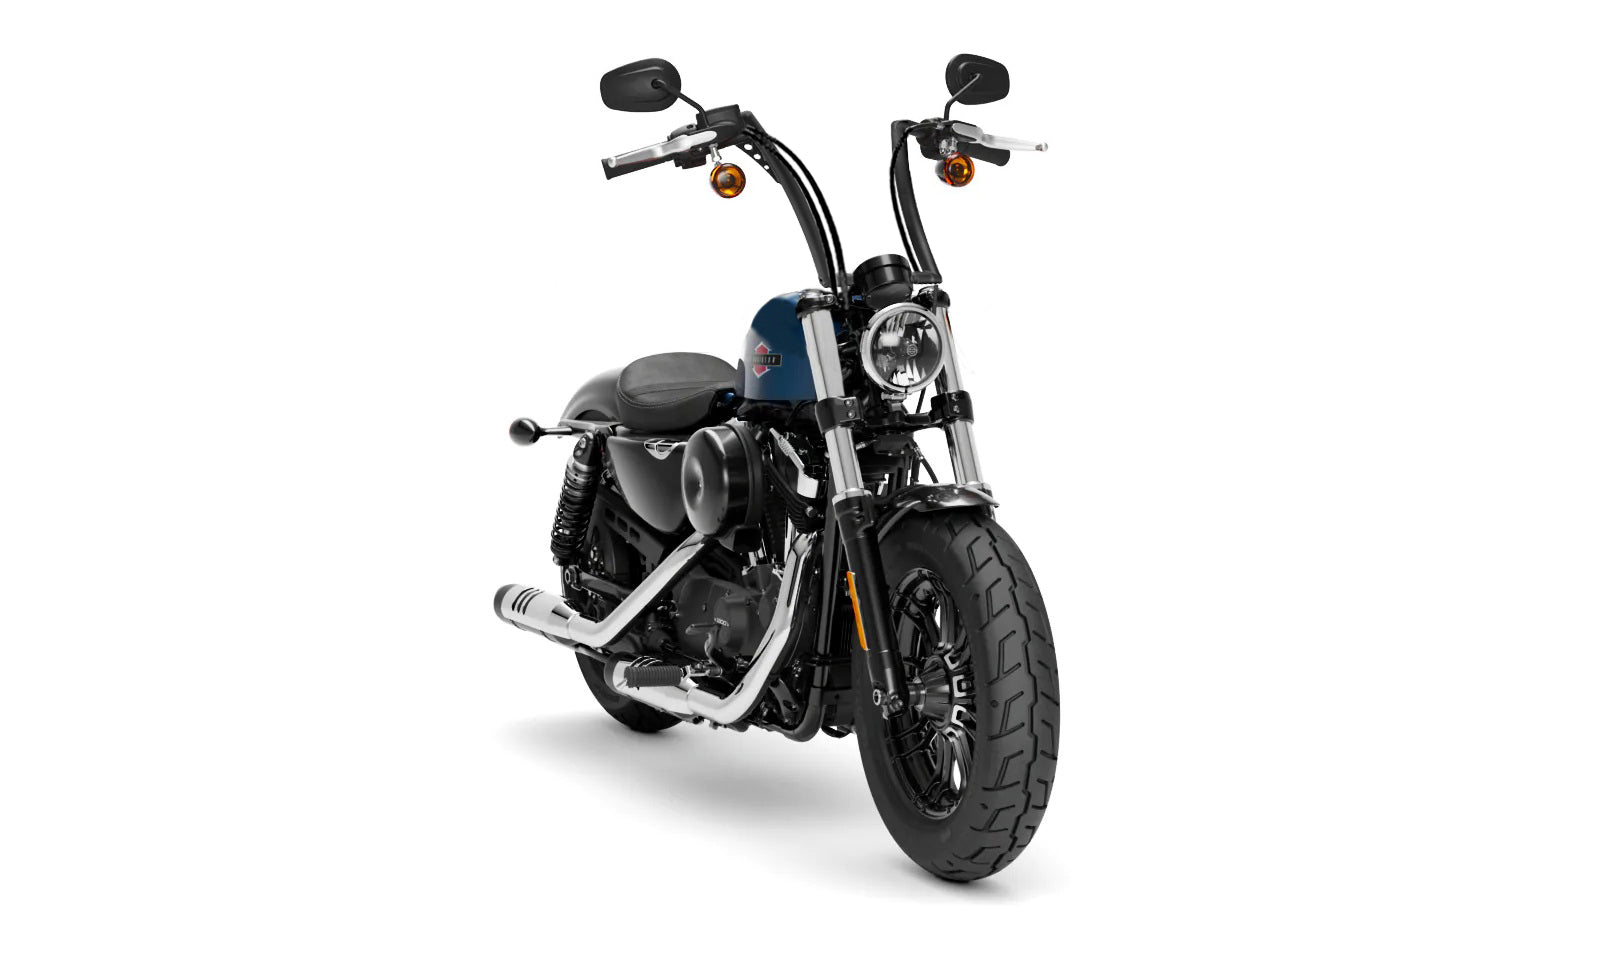 Viking Iron Born 12" Handlebar for Harley Sportster Forty Eight Matte Black Bag on Bike View @expand